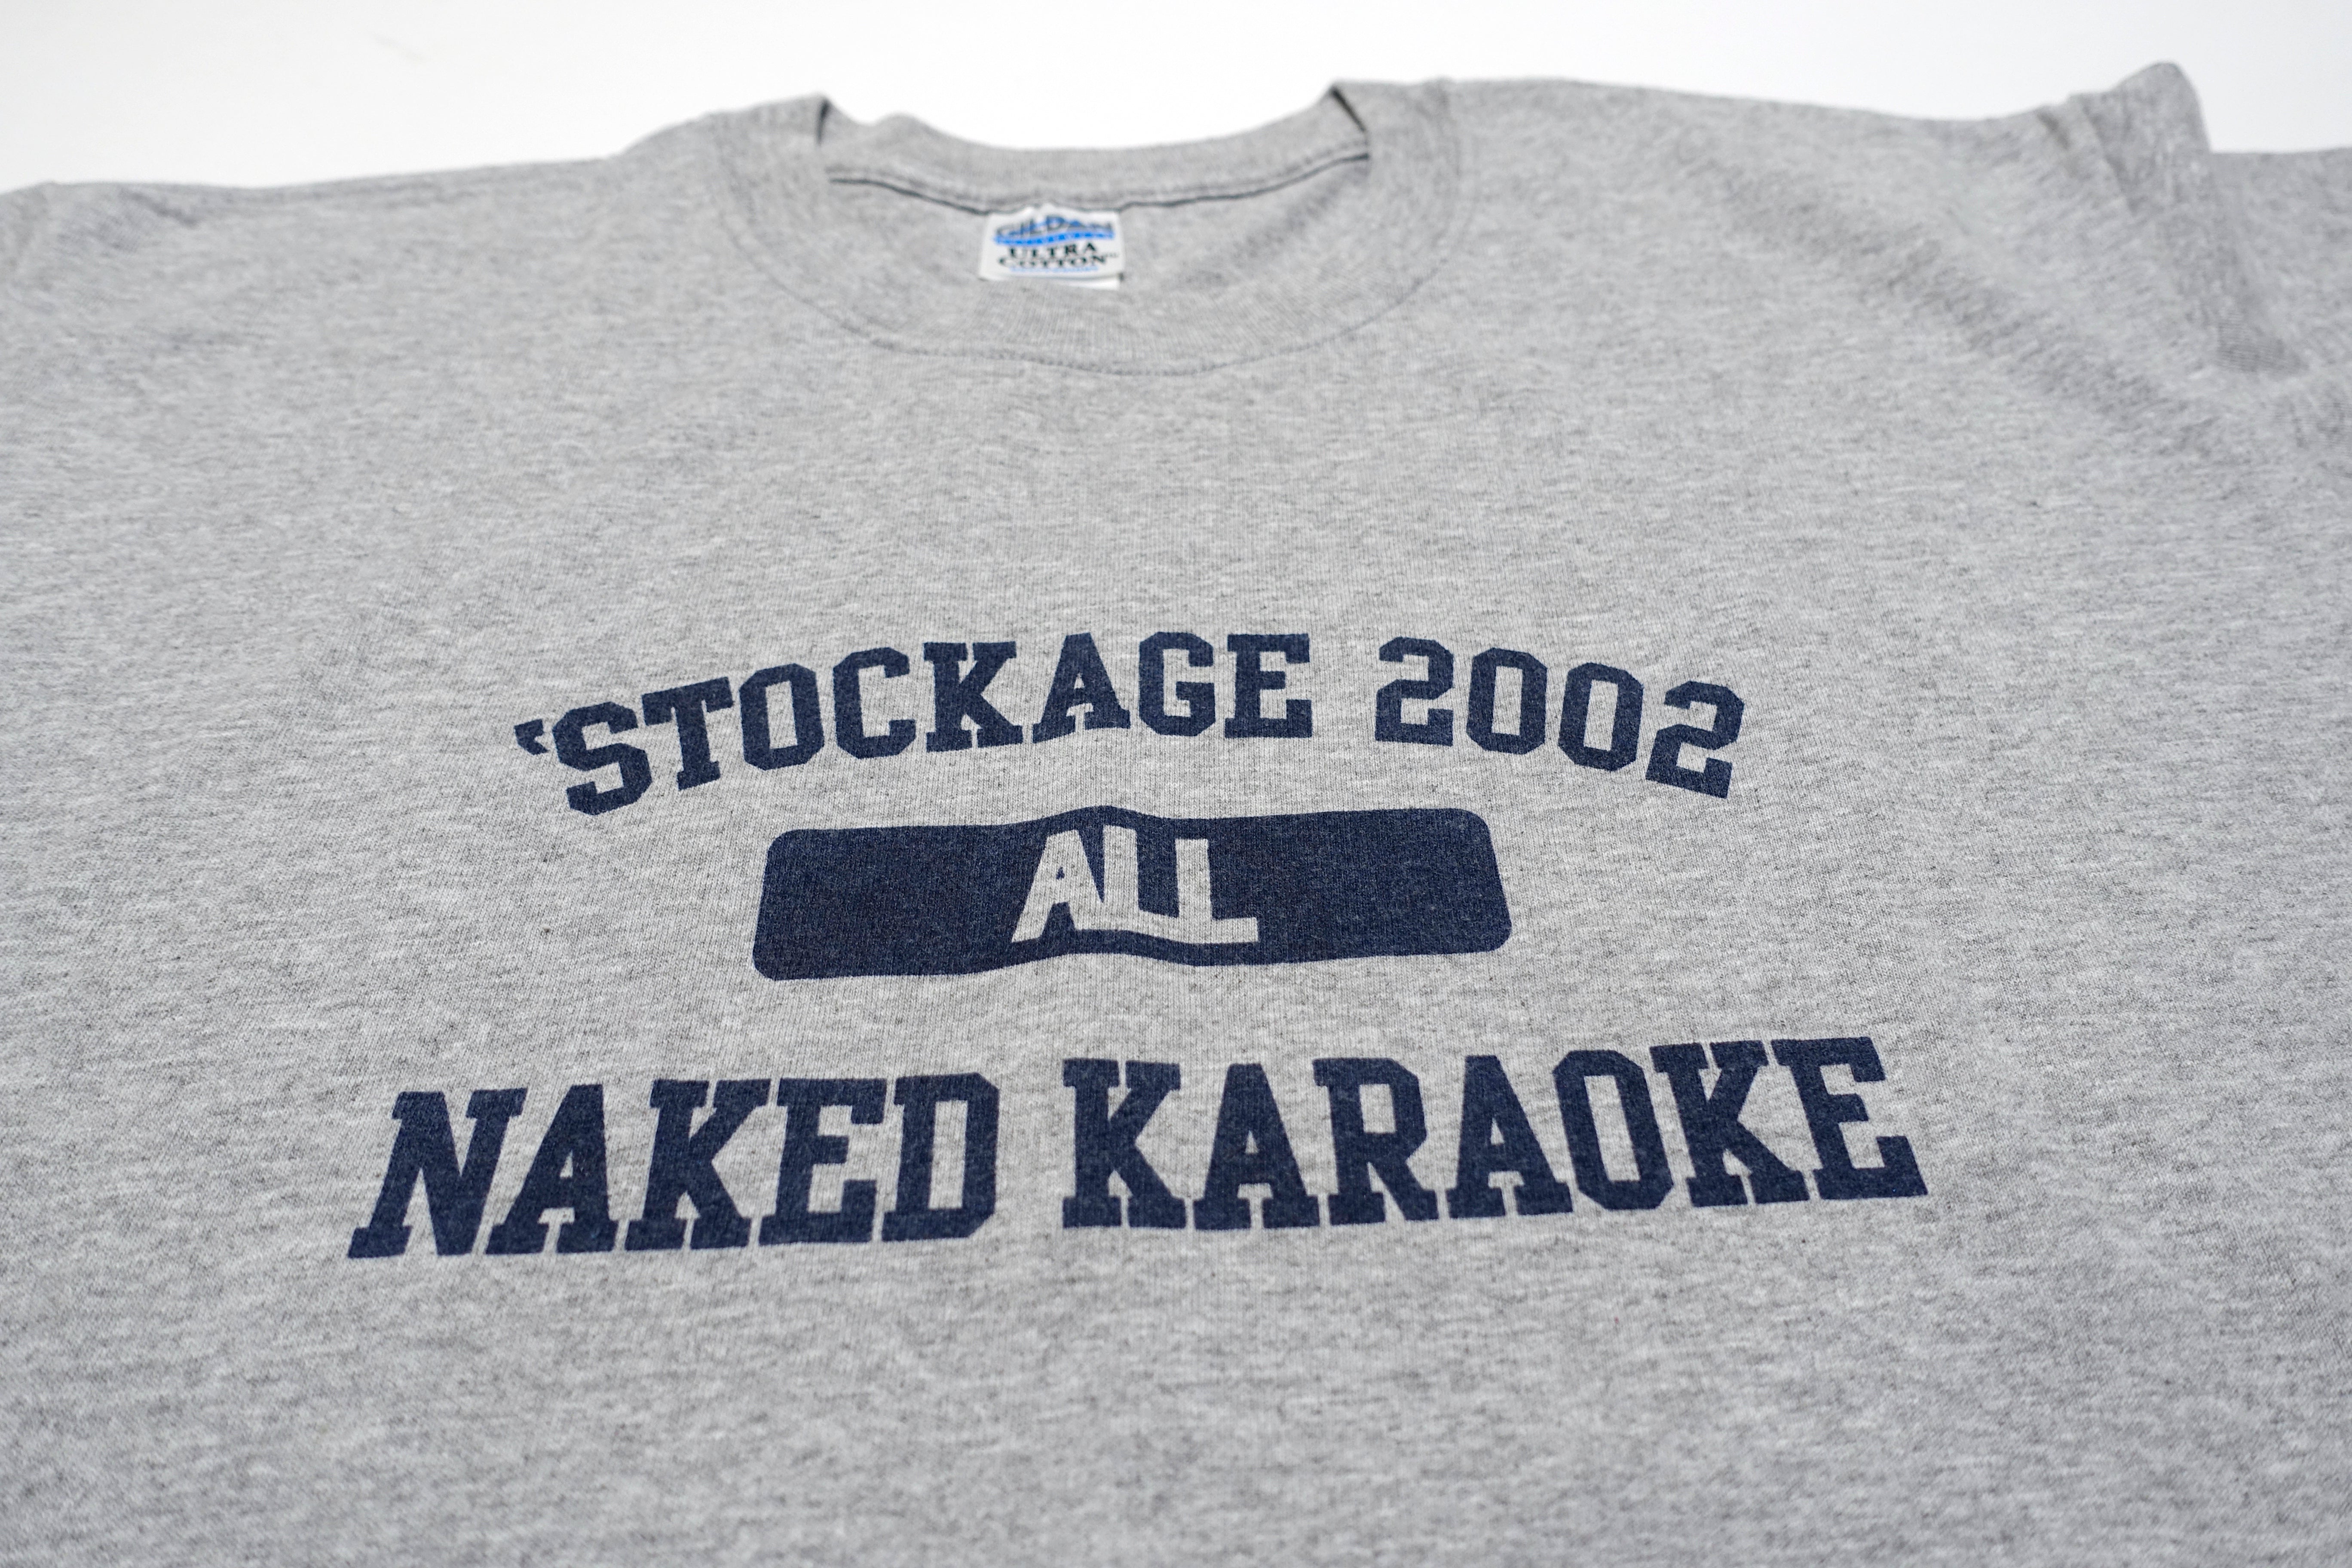 ALL - Stockage / Naked Karaoke Tour Shirt Size Large